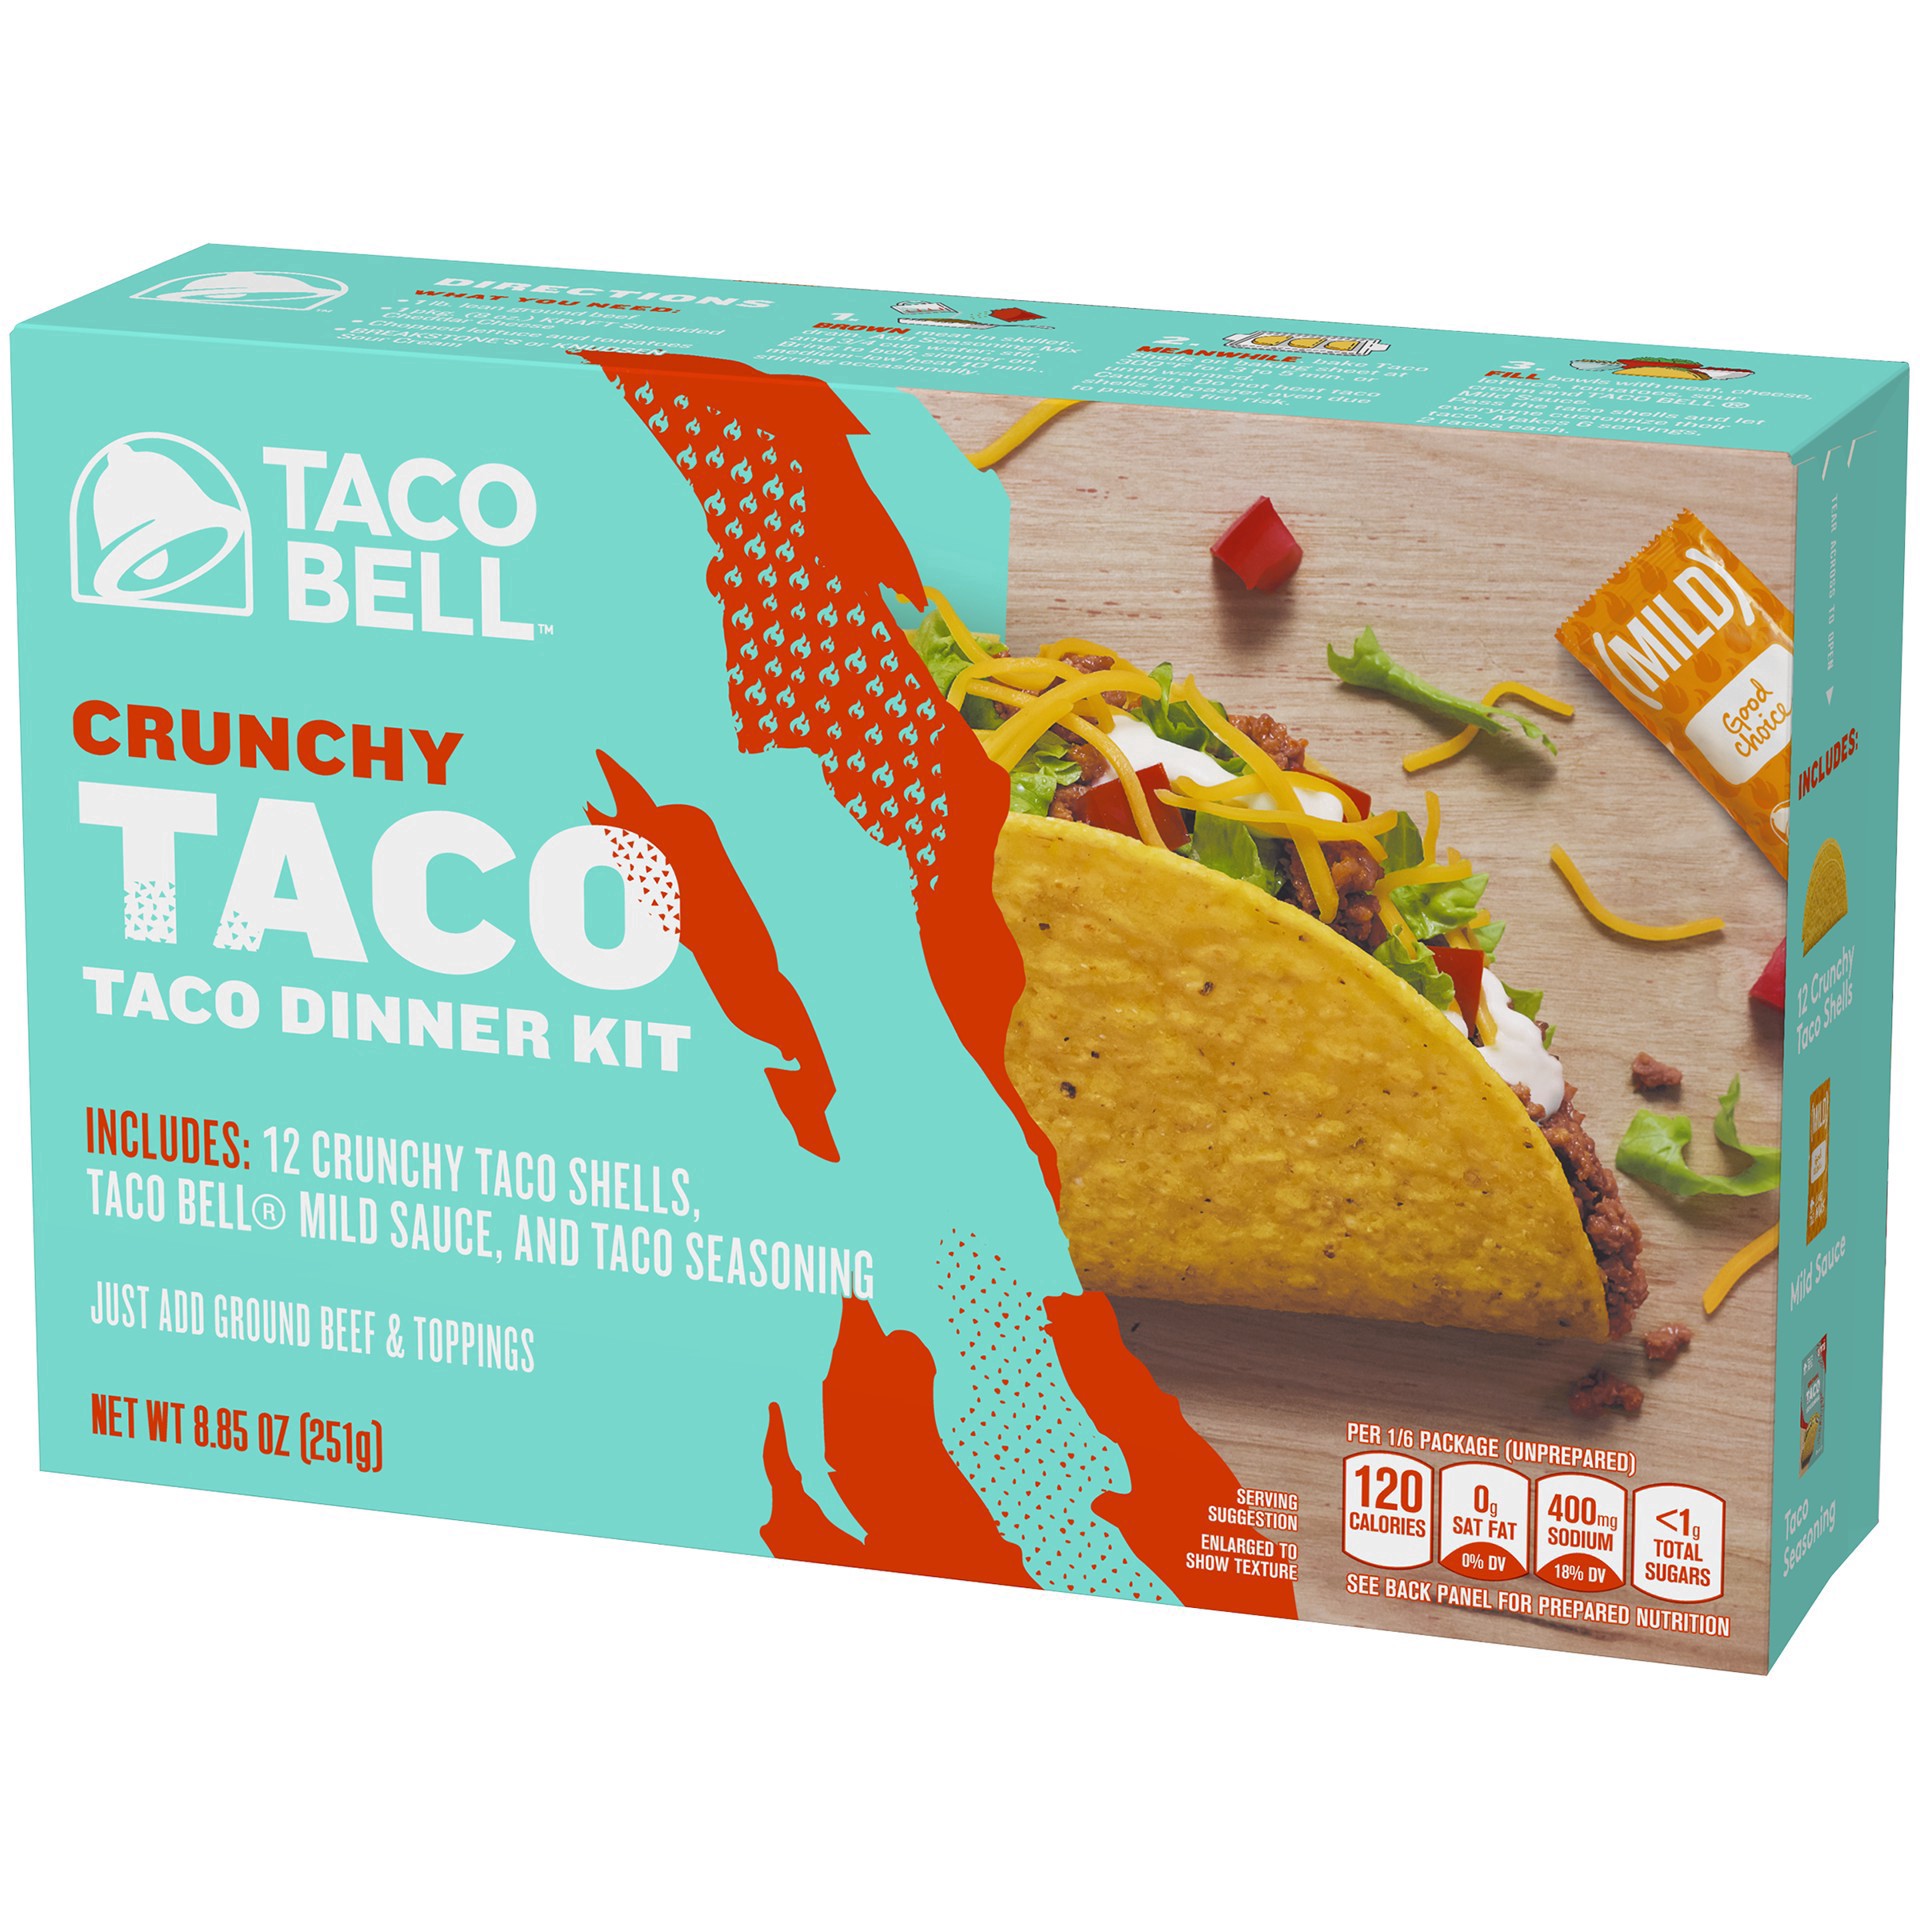 slide 77 of 91, Taco Bell Crunchy Taco Cravings Kit with 12 Crunchy Taco Shells, Taco Bell Mild Sauce & Seasoning, 8.85 oz Box, 1 ct